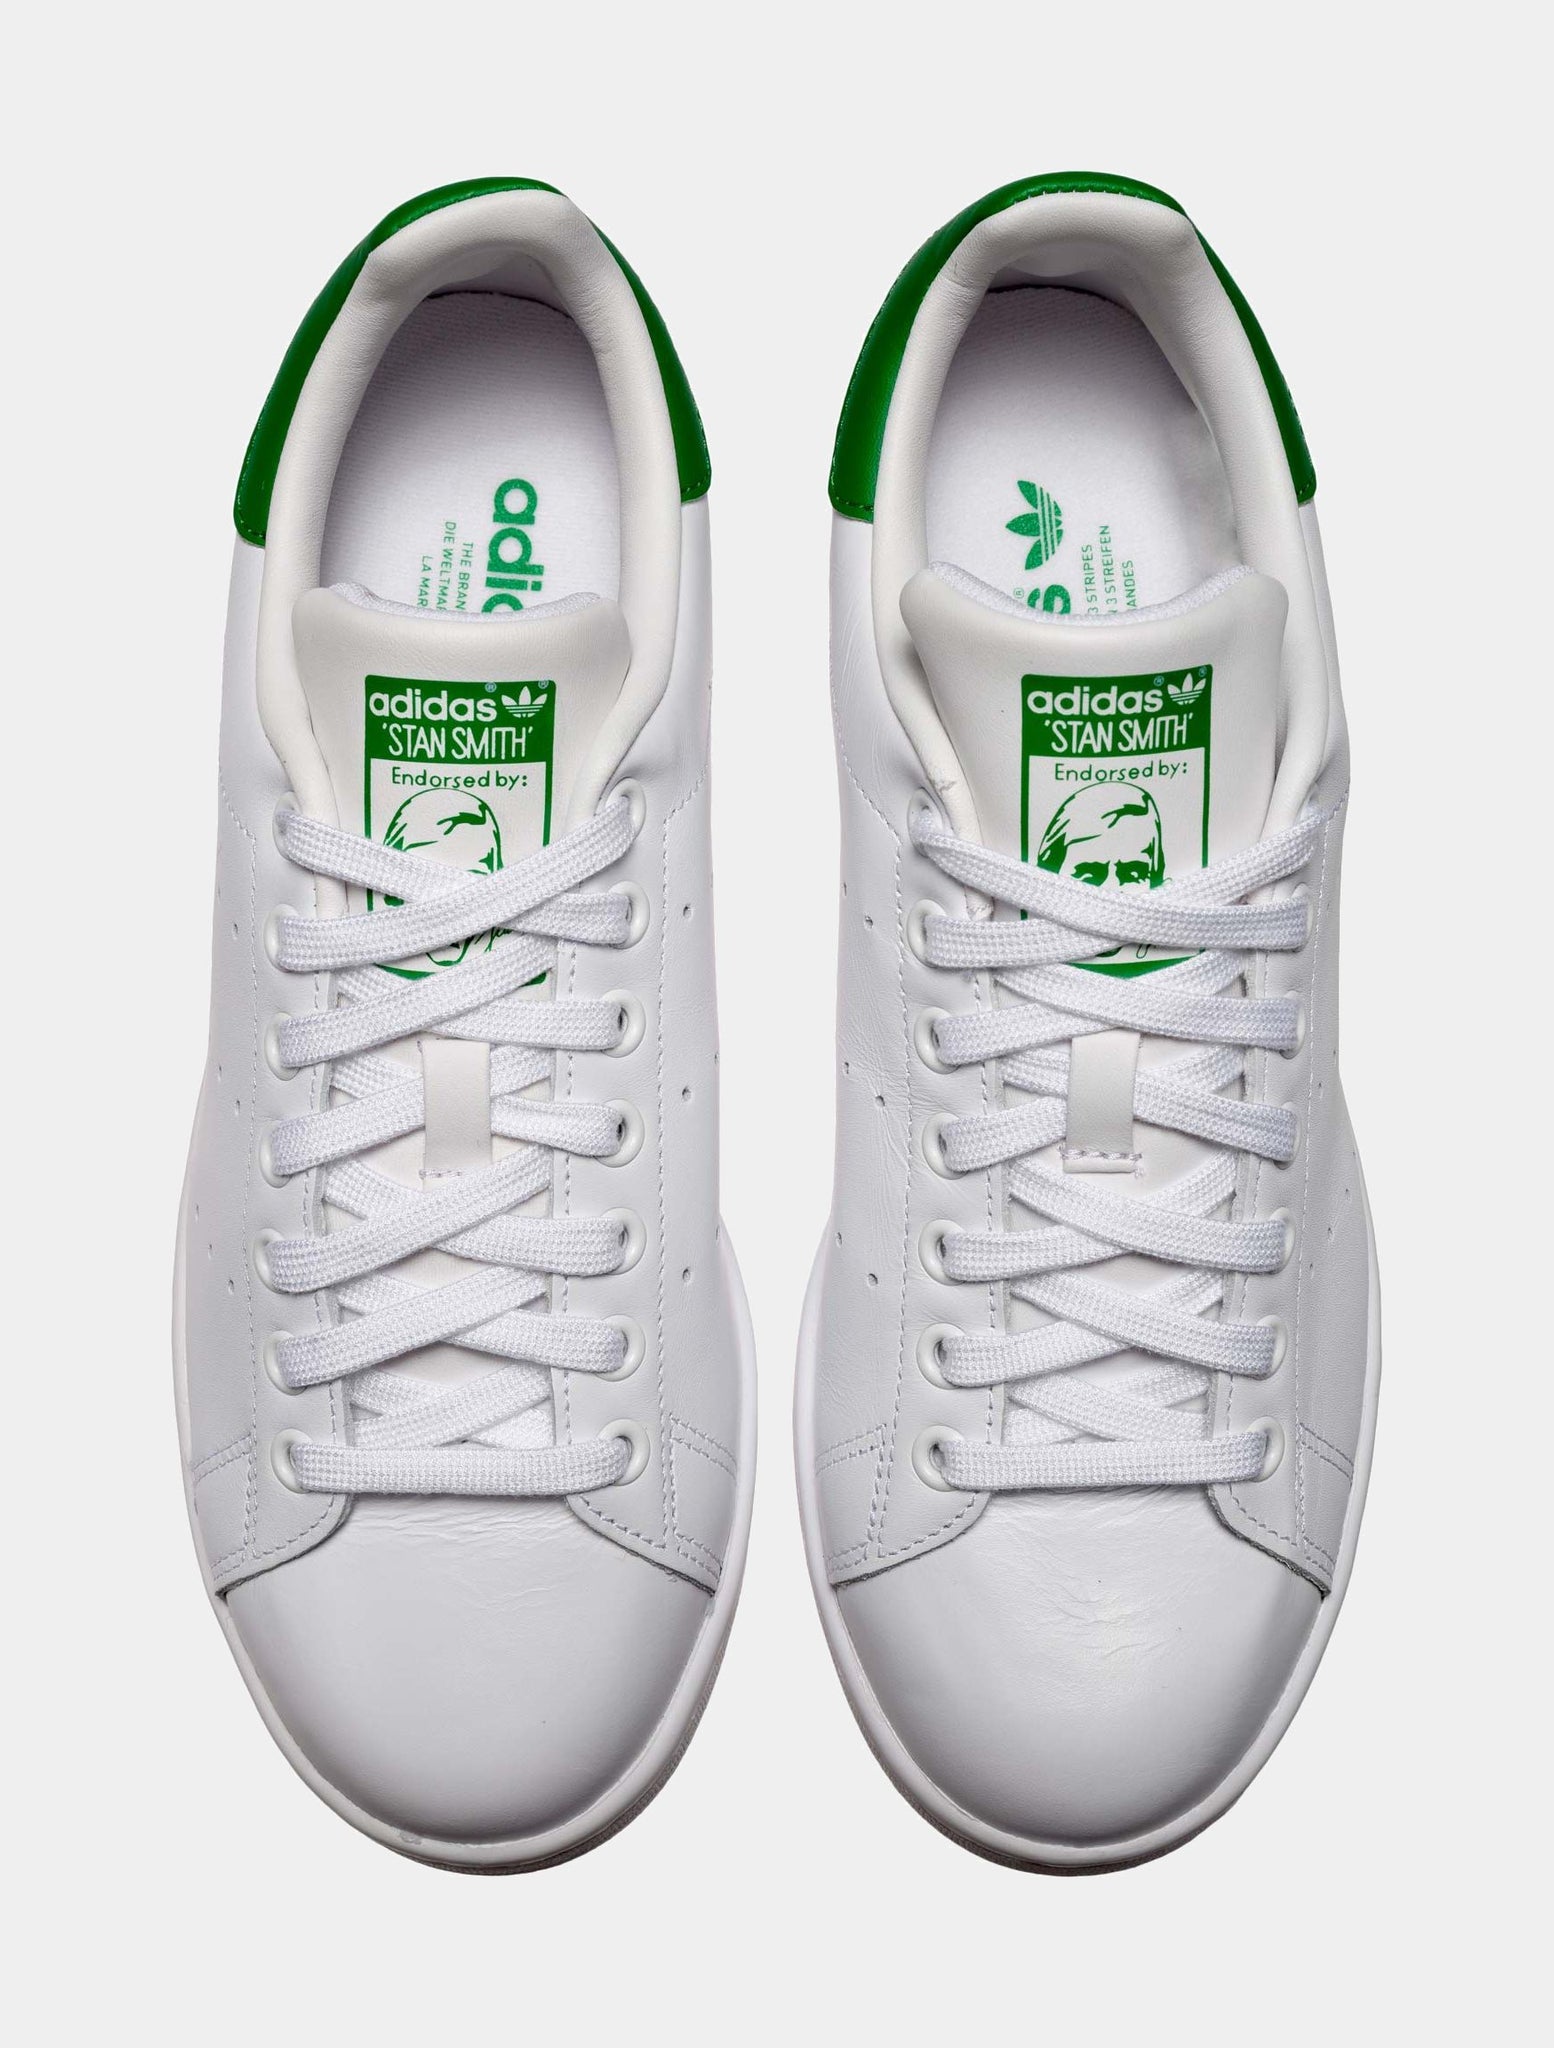 progresivo Drama aumento adidas Stan Smith Original Mens Lifestyle Shoe White Green M20324 – Shoe  Palace